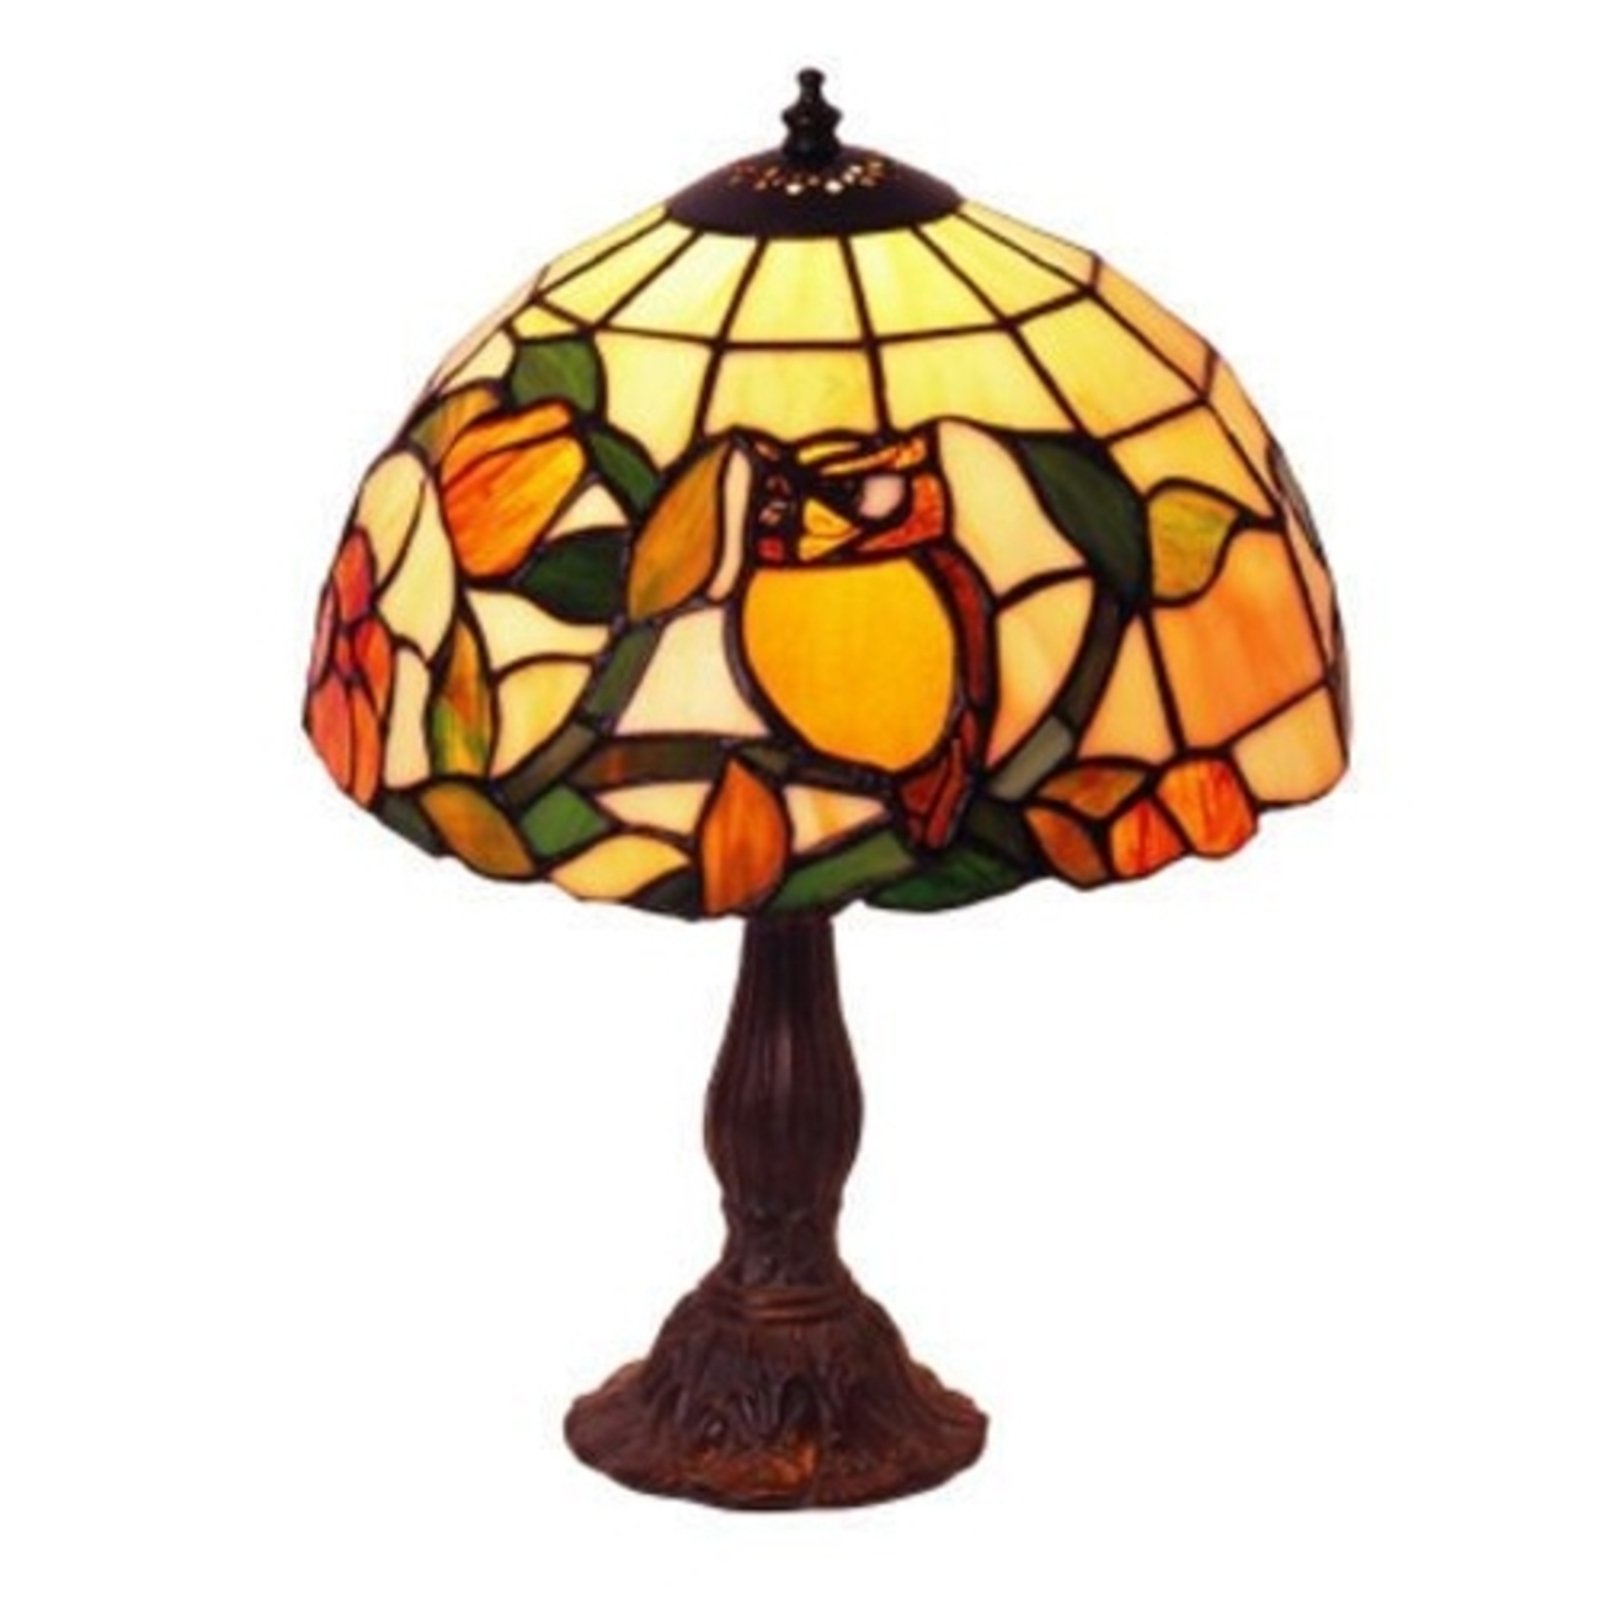 Motif table lamp JULIANA in the Tiffany style